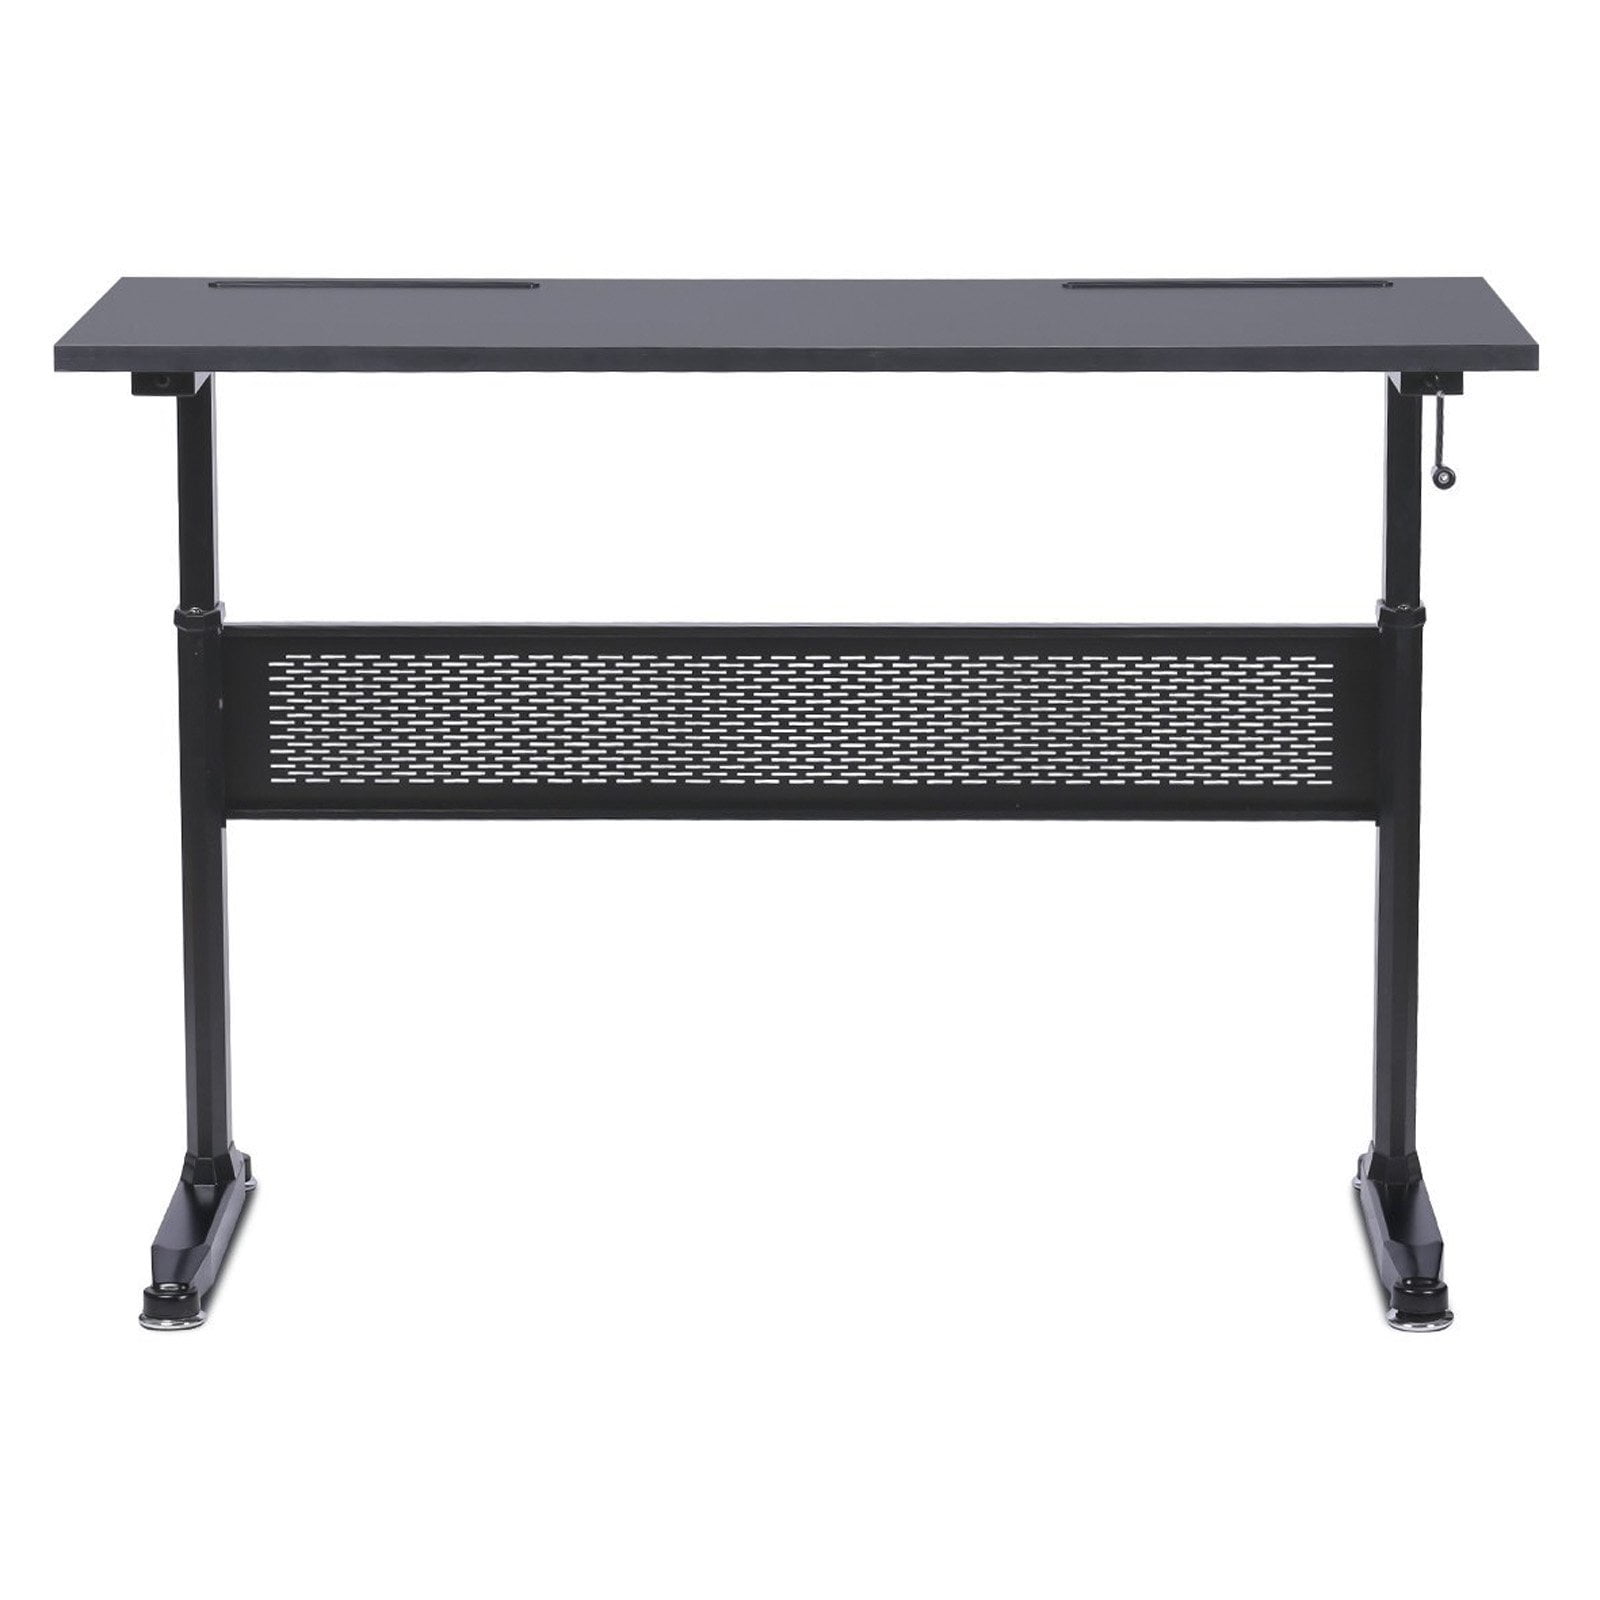 Abc102bktt Height Adjustable Crank Desk With Table Top - Black